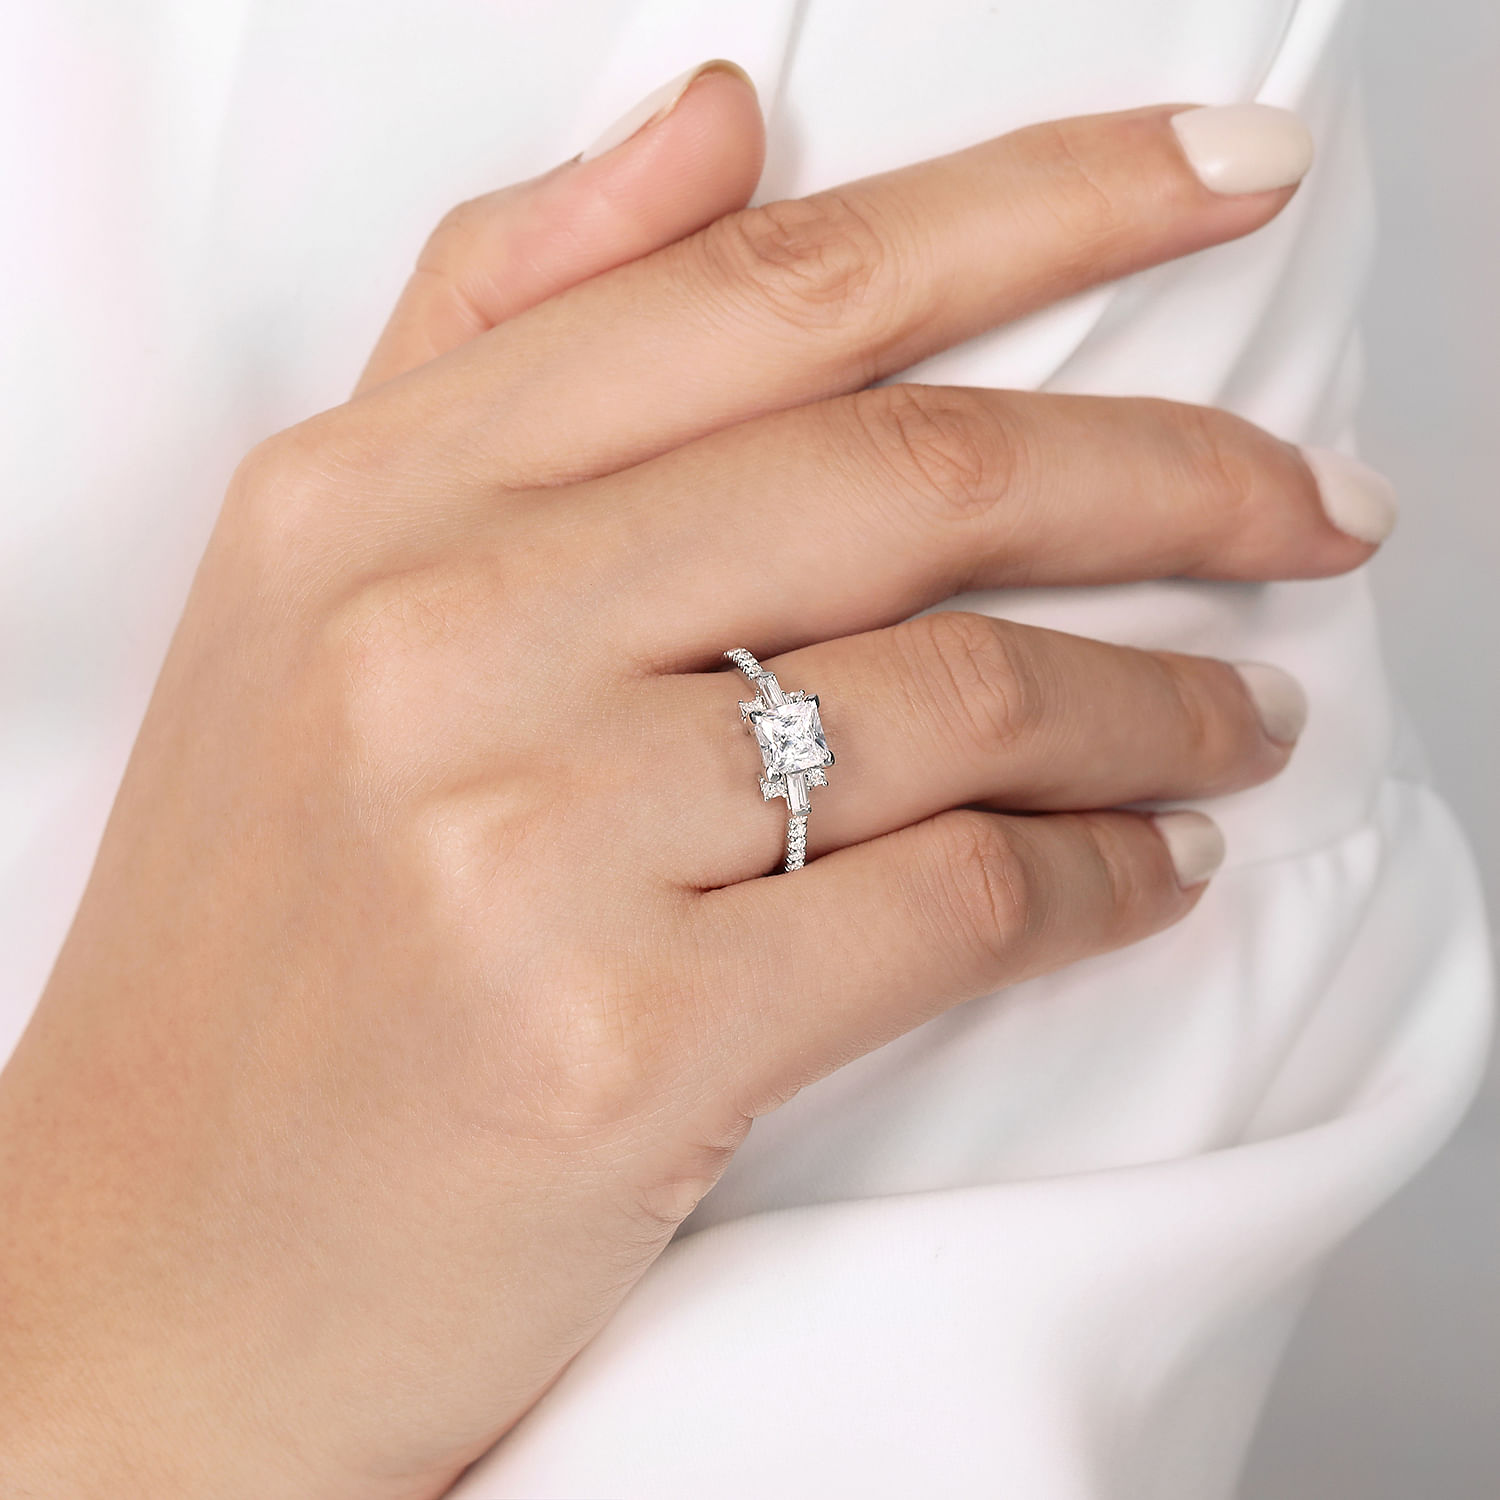 Vintage Inspired 14k White Gold Princess Cut Three Stone Diamond Channel Set Engagement Ring